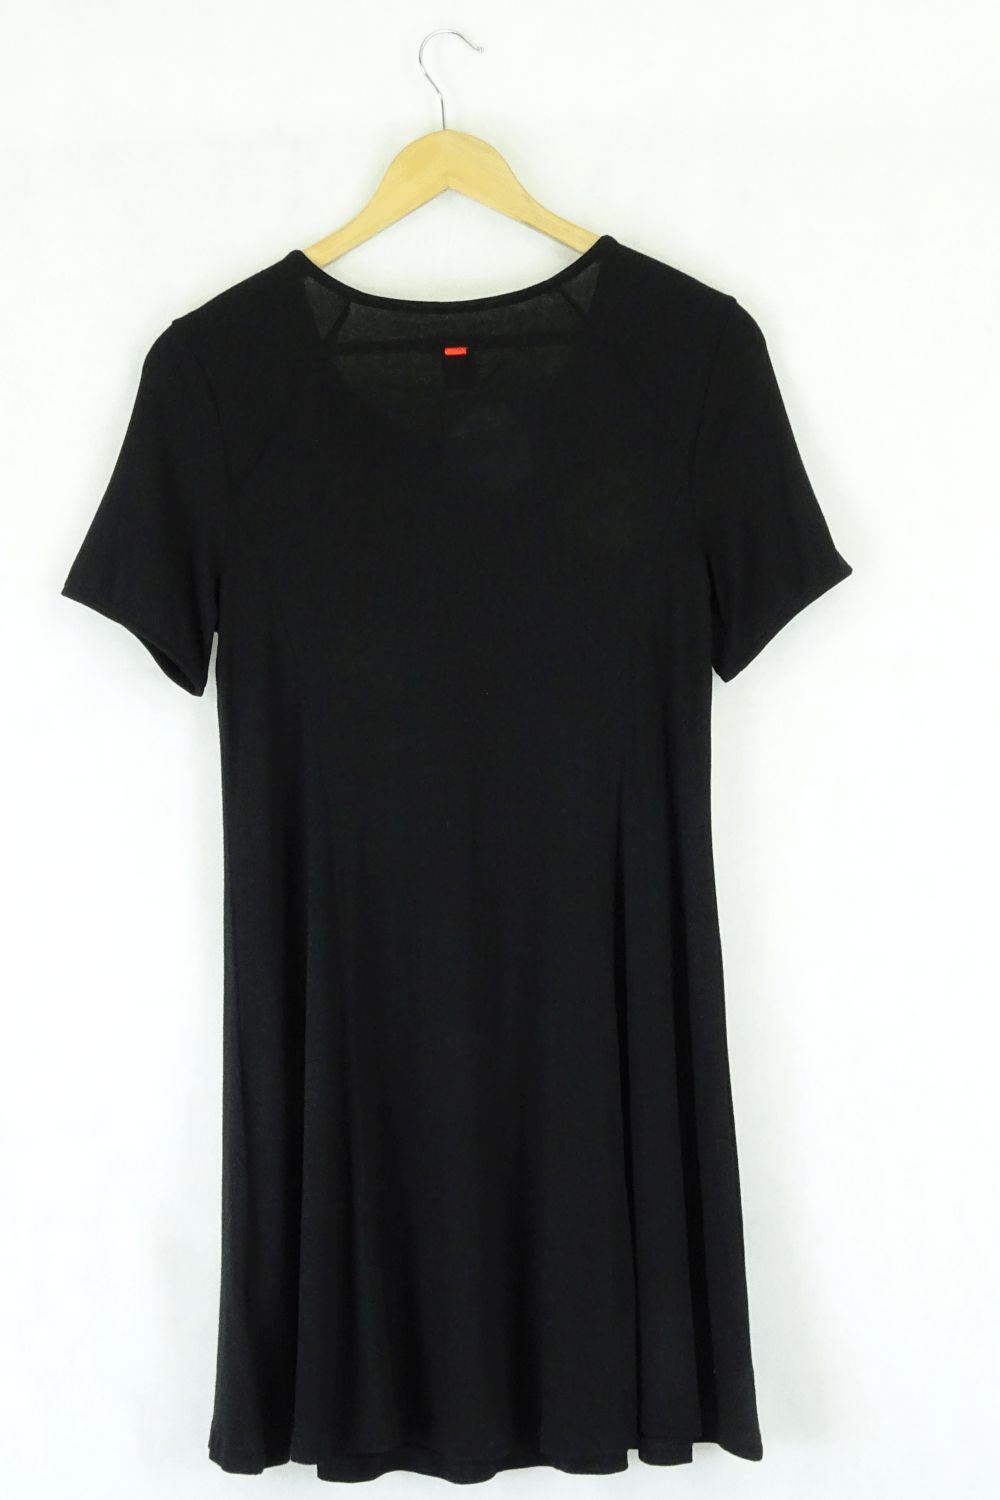 Castro S Black Dress